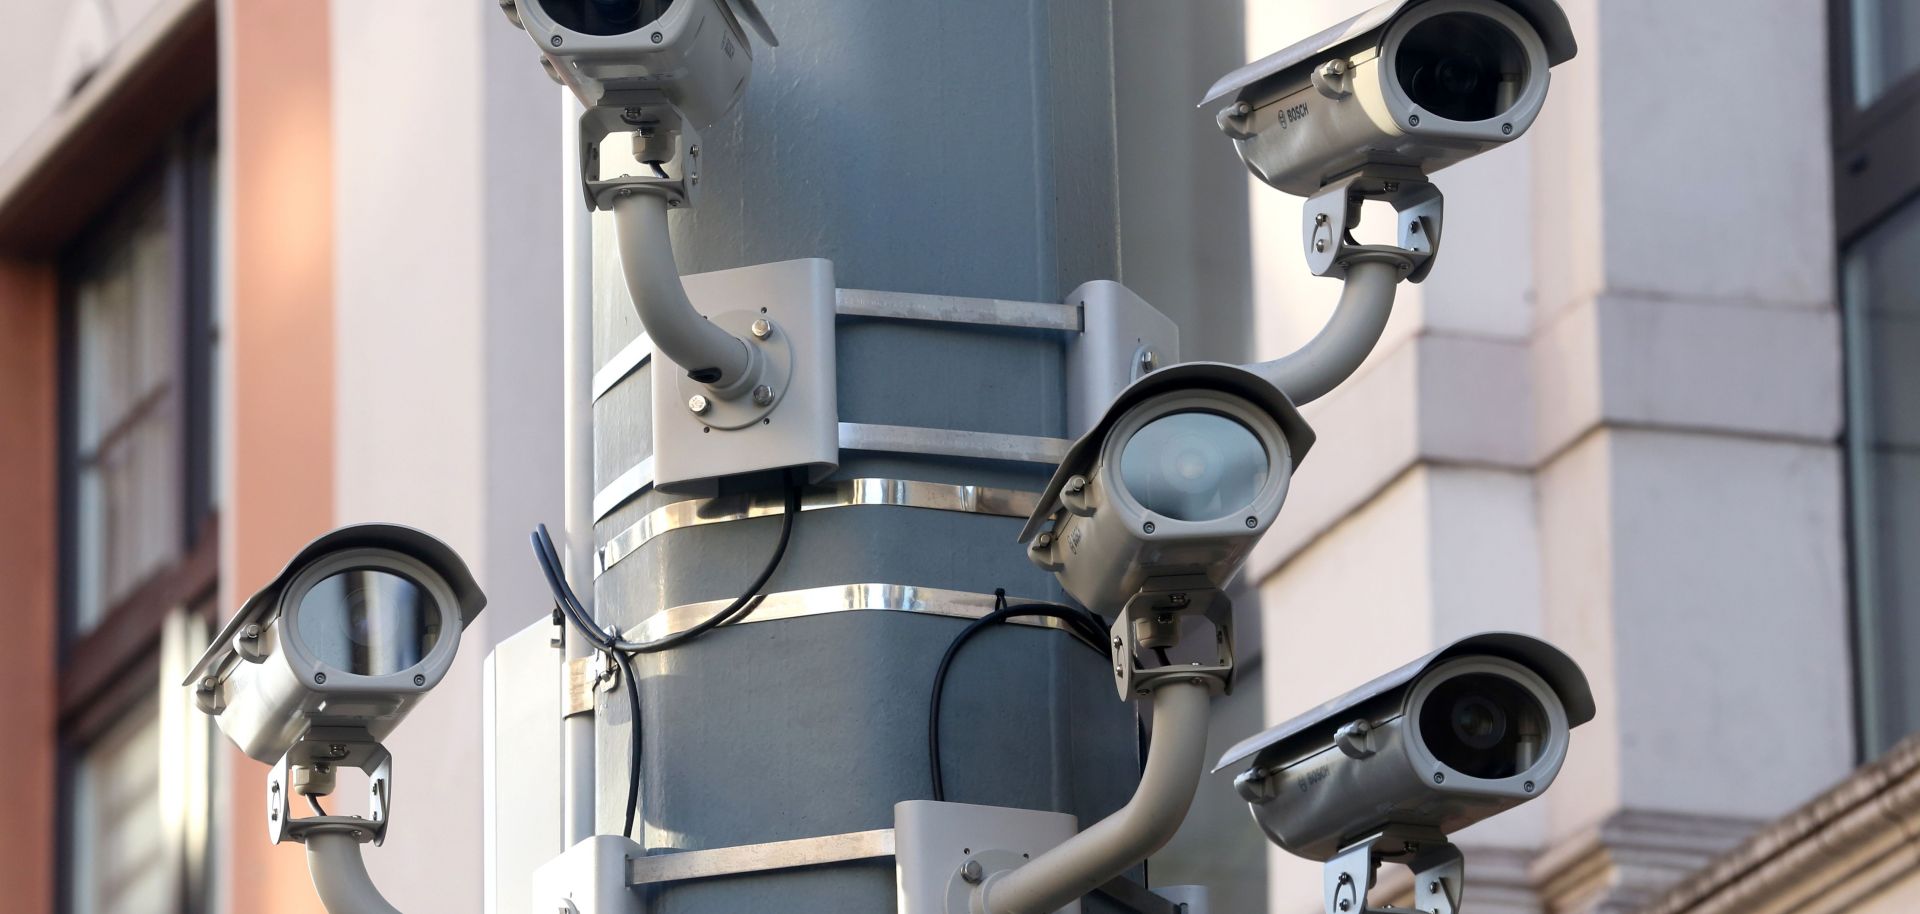 Five surveillance cameras on a lamppost. 